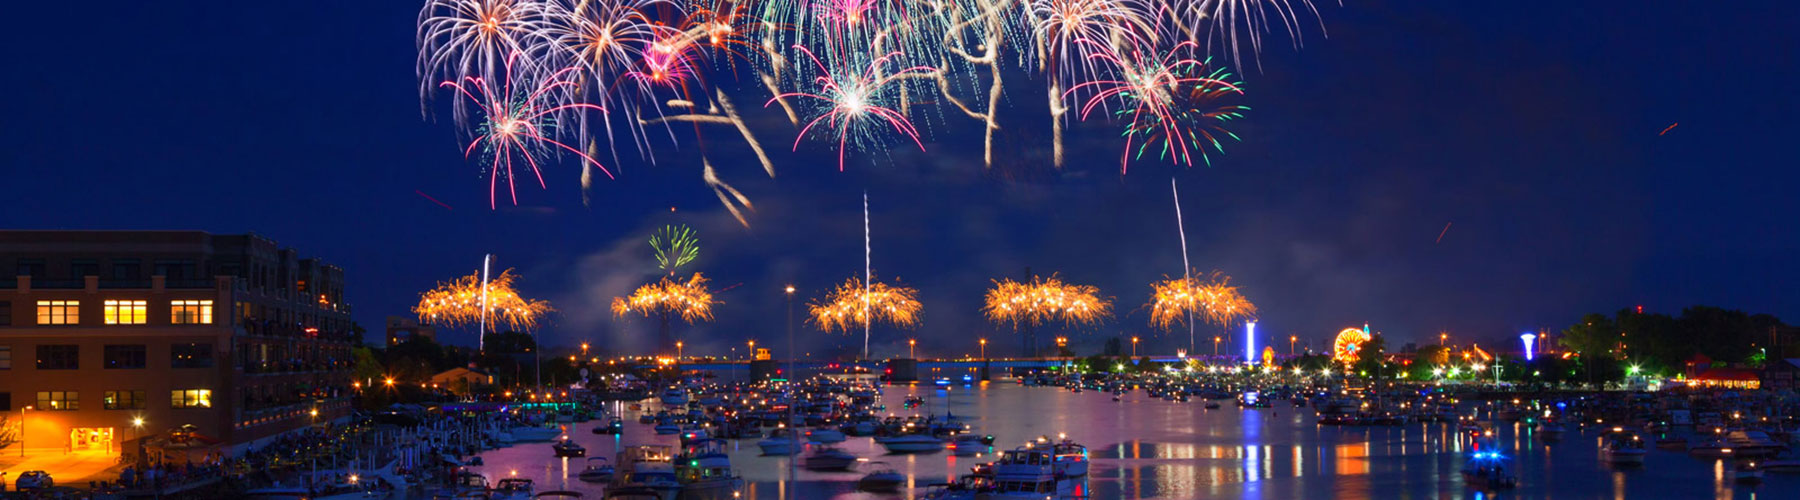 Bay City Fireworks Festival along Saginaw River